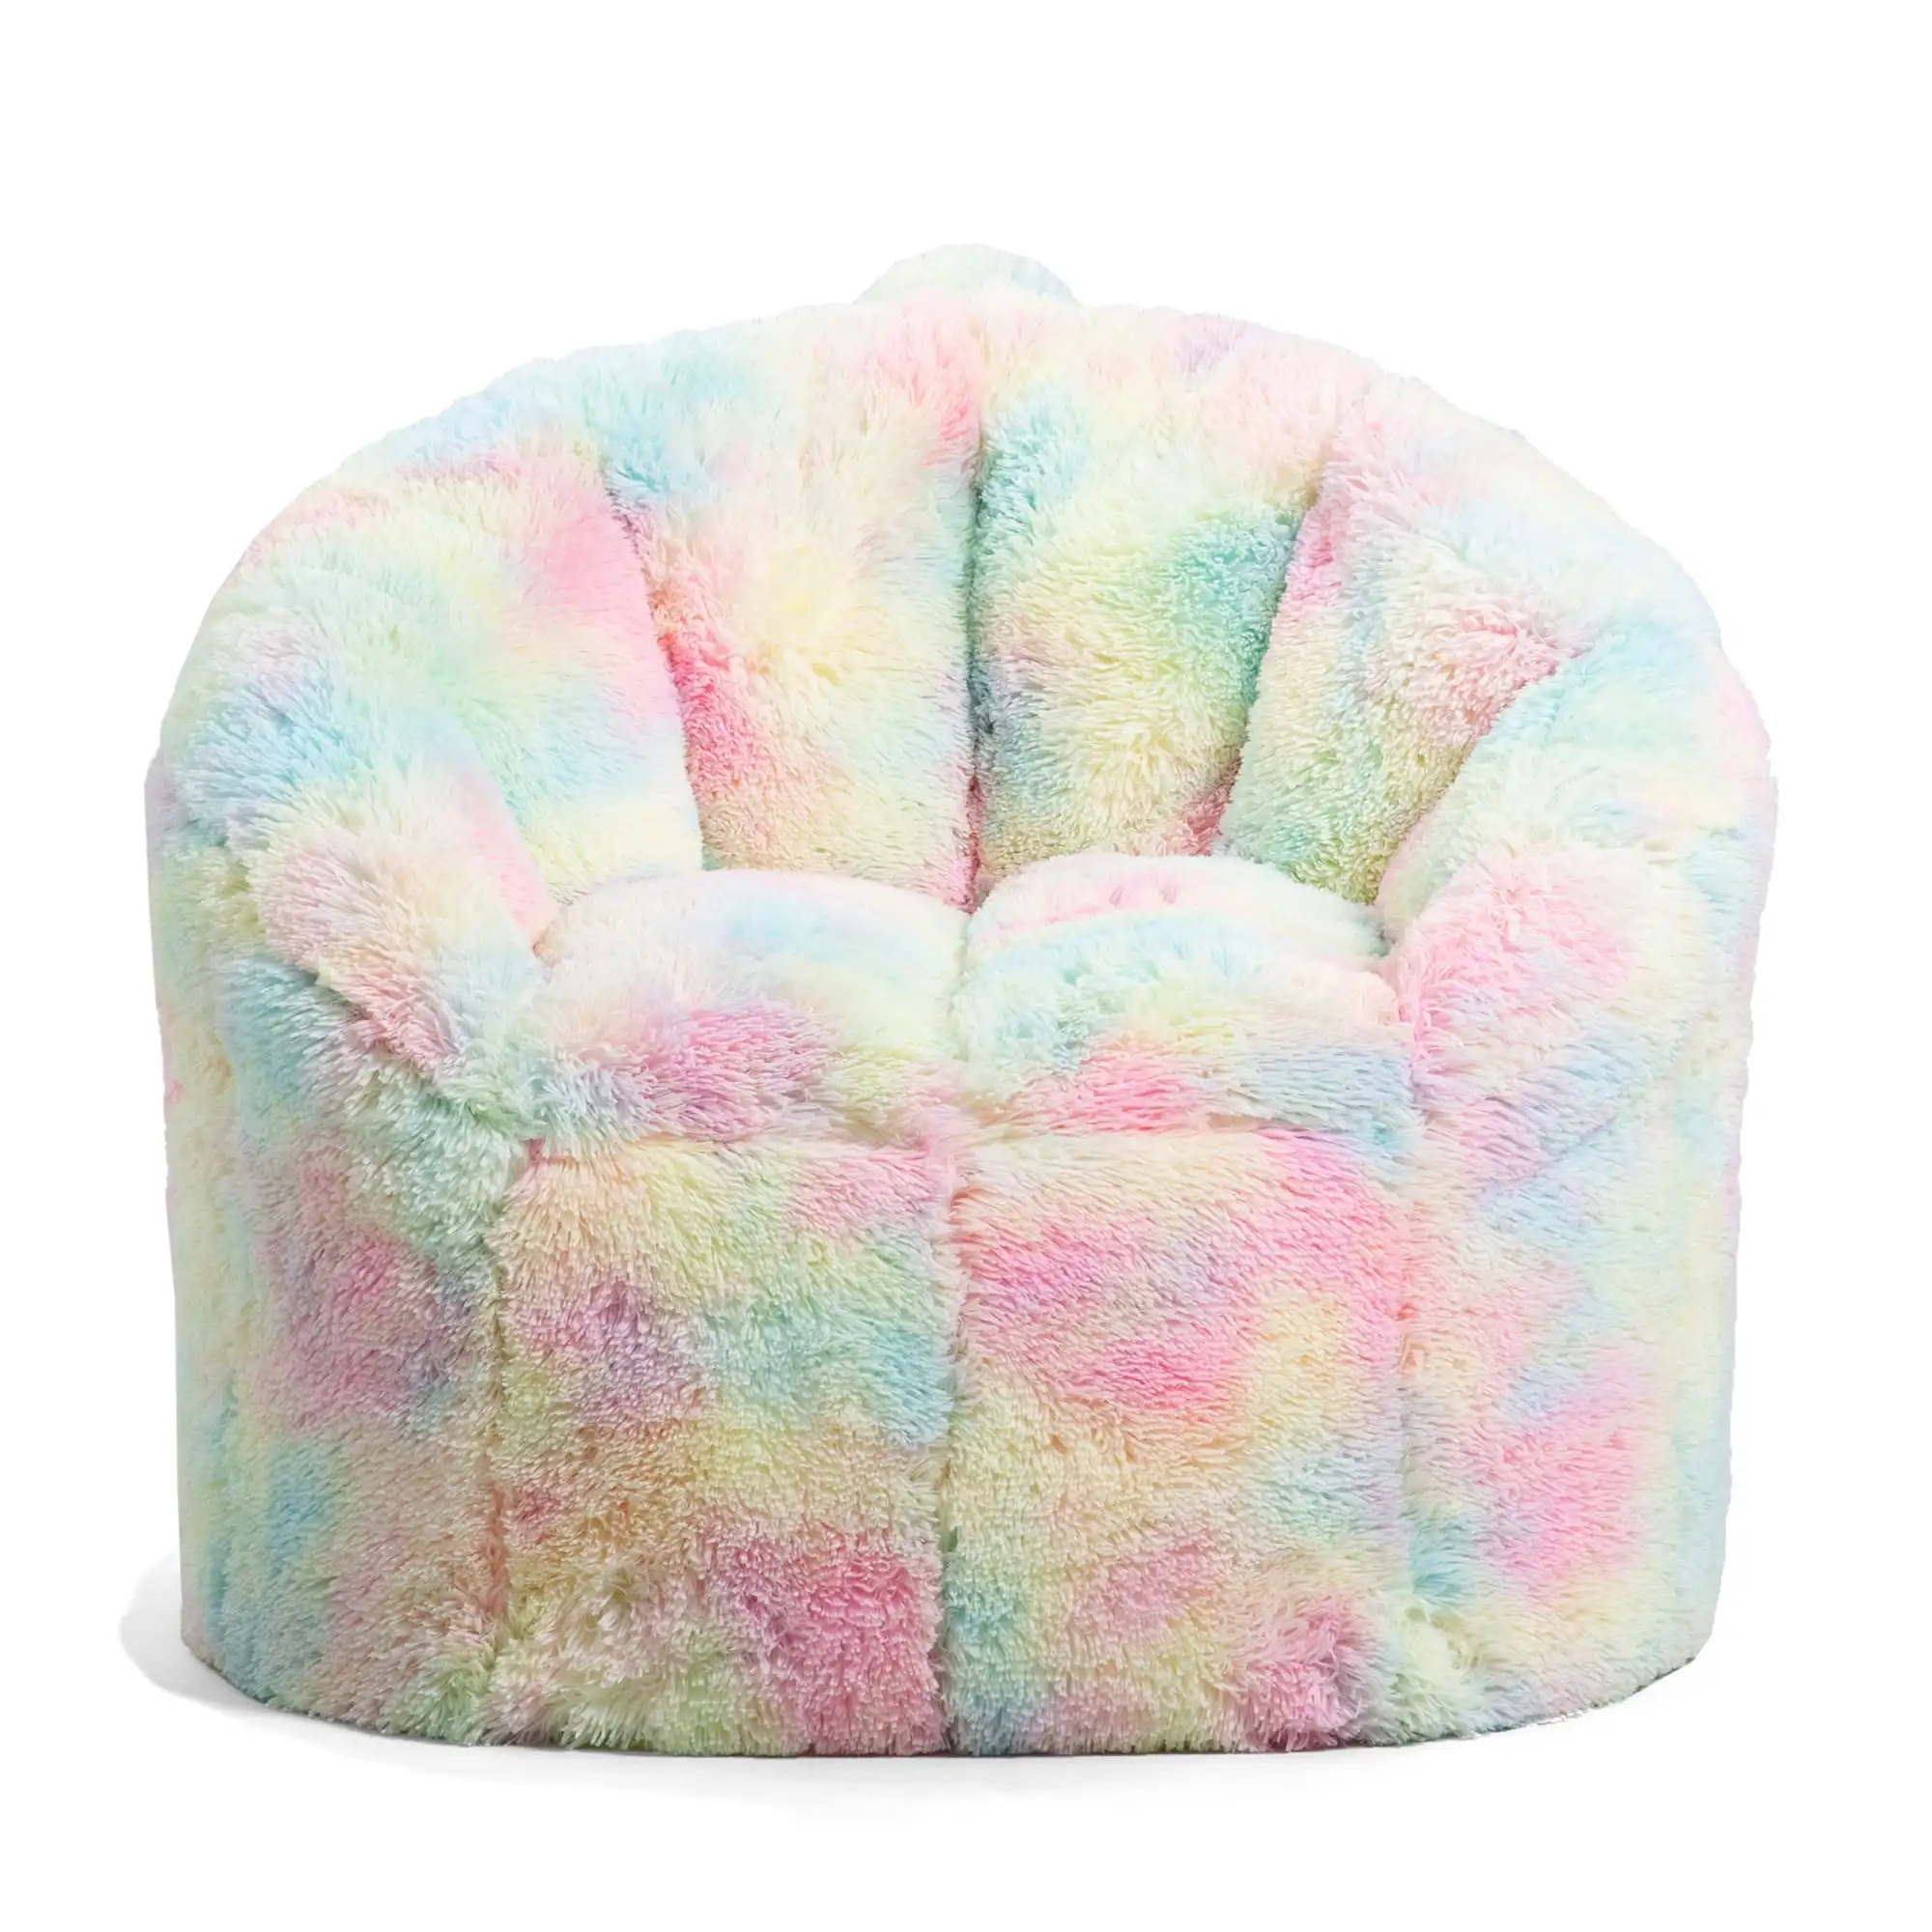 

2.5 Feet Bean Bag Chair, Tie Dye Bean Bag Couch Filled Lazy Sofa with Soft Faux Fur Cover (Unicorn Rainbow)